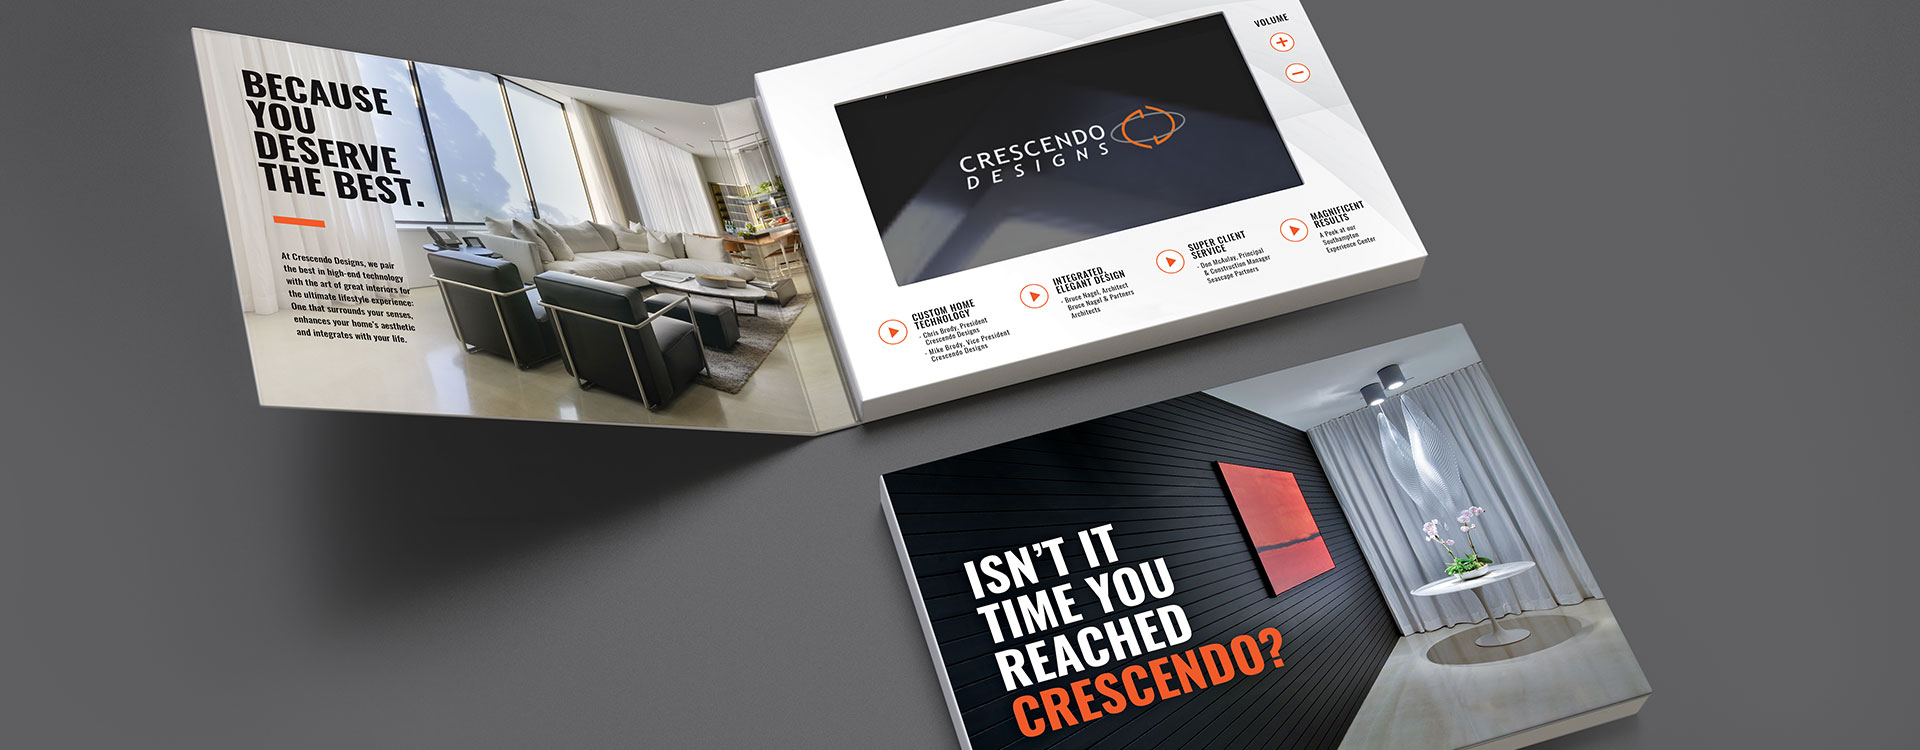 Crescendo Designs Case Study by Austin Williams a New York Digital Marketing Agency